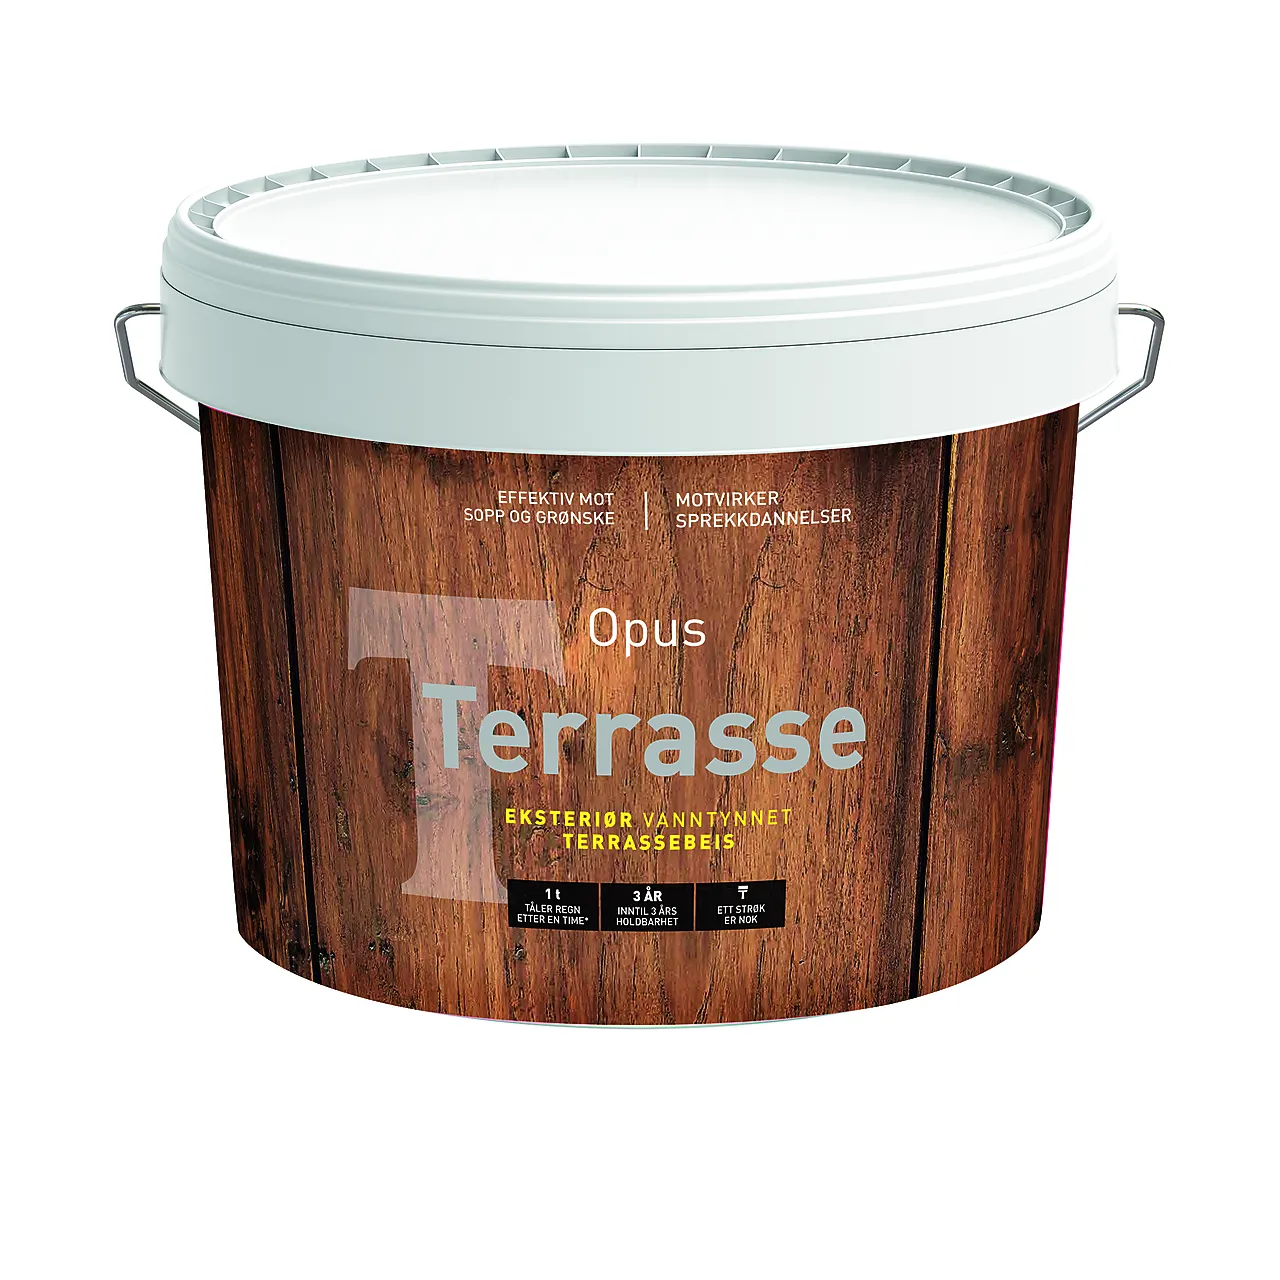 Terrassebeis c-base 9 liter